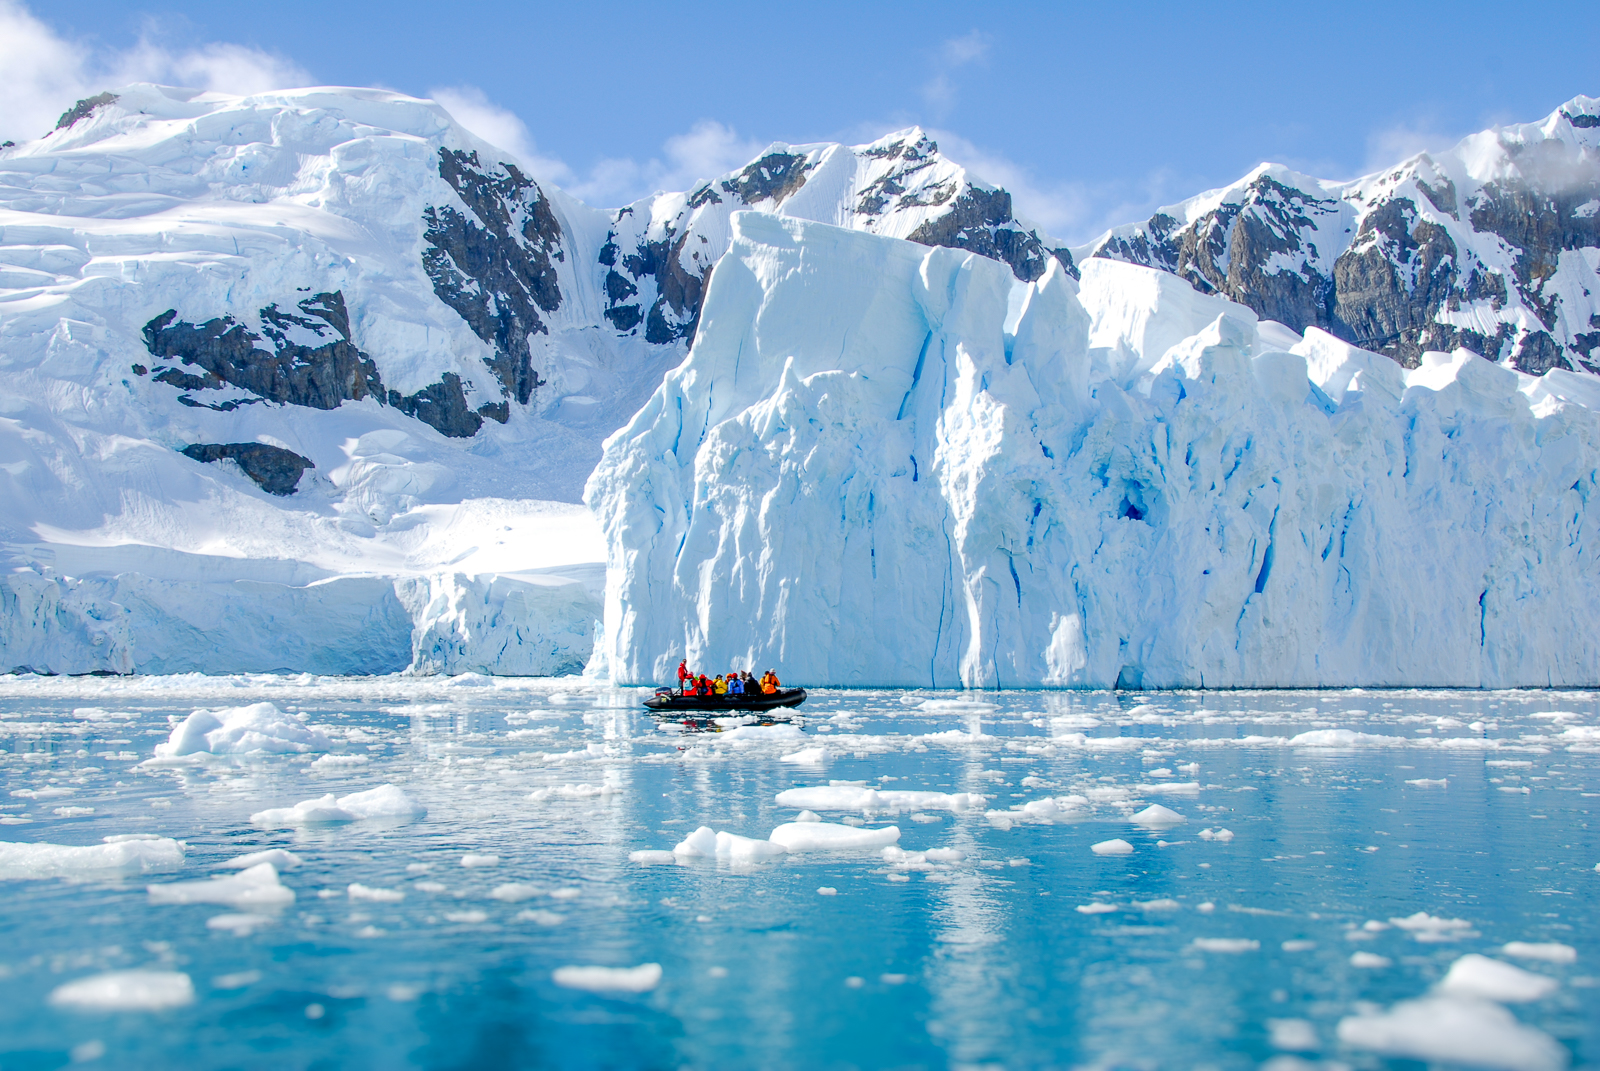 A zodiac cruising past icy cliffs in Antarctica